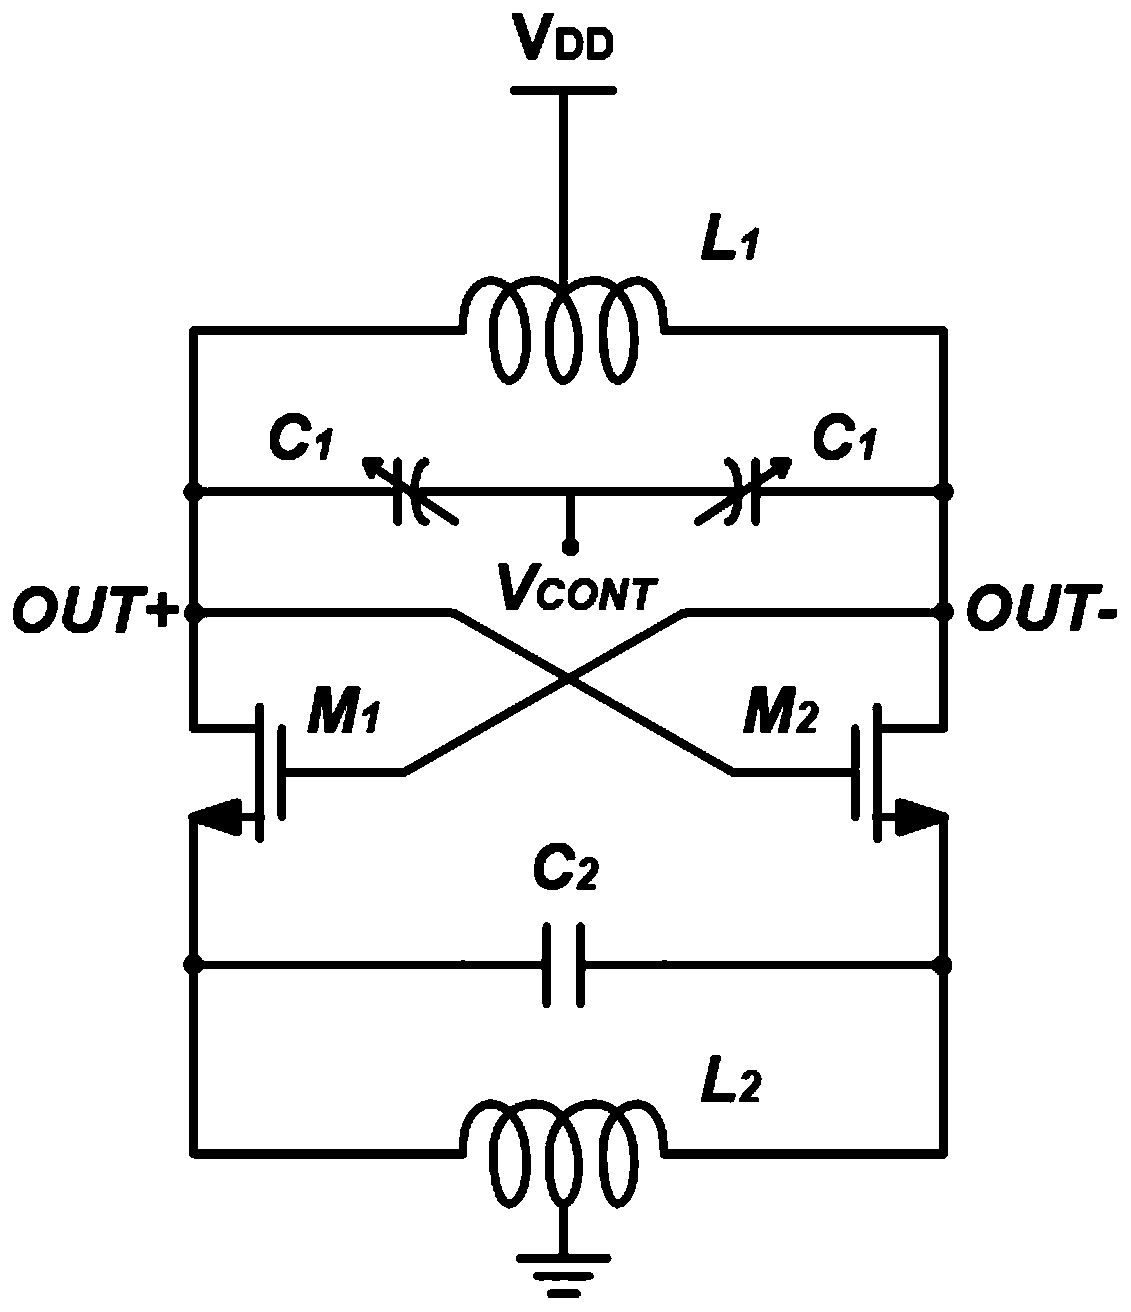 Class-F voltage-controlled oscillator